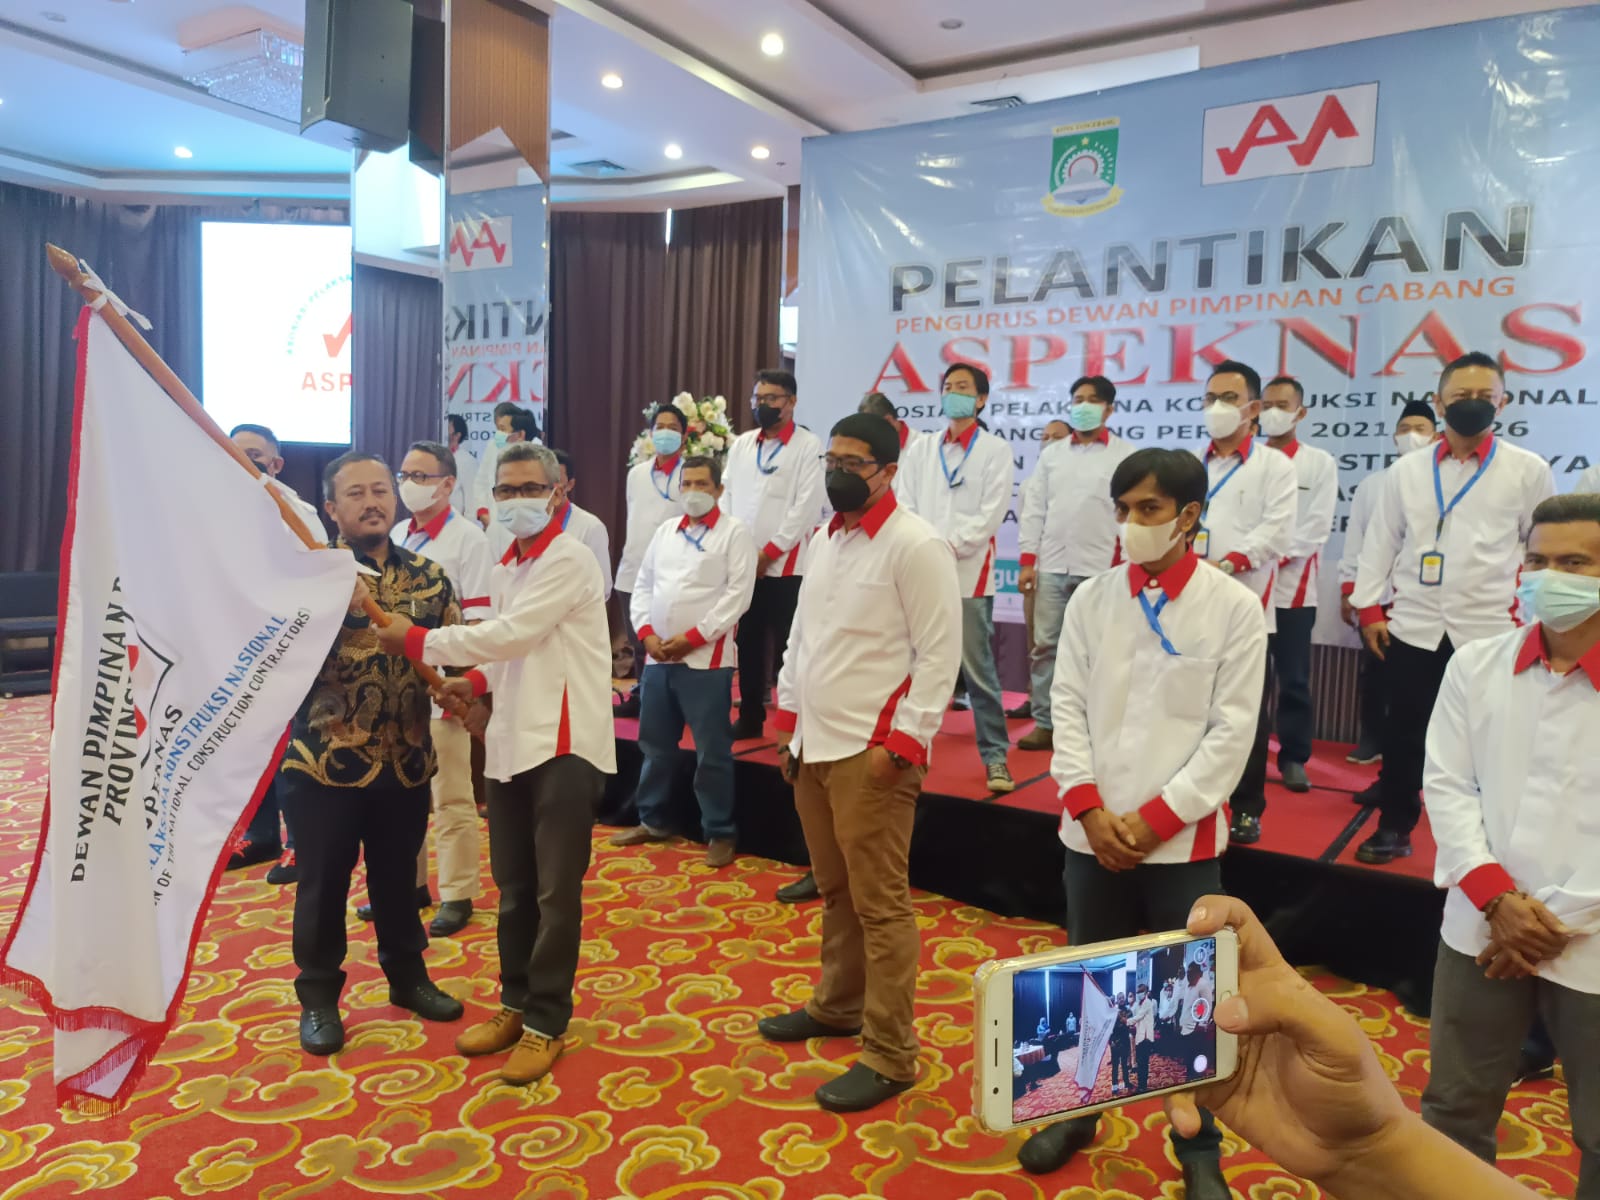 Kegiatan pelantikan Aspeknas di Pakons Primes Hotel, Kota Tangerang, Rabu 6 September 2021.